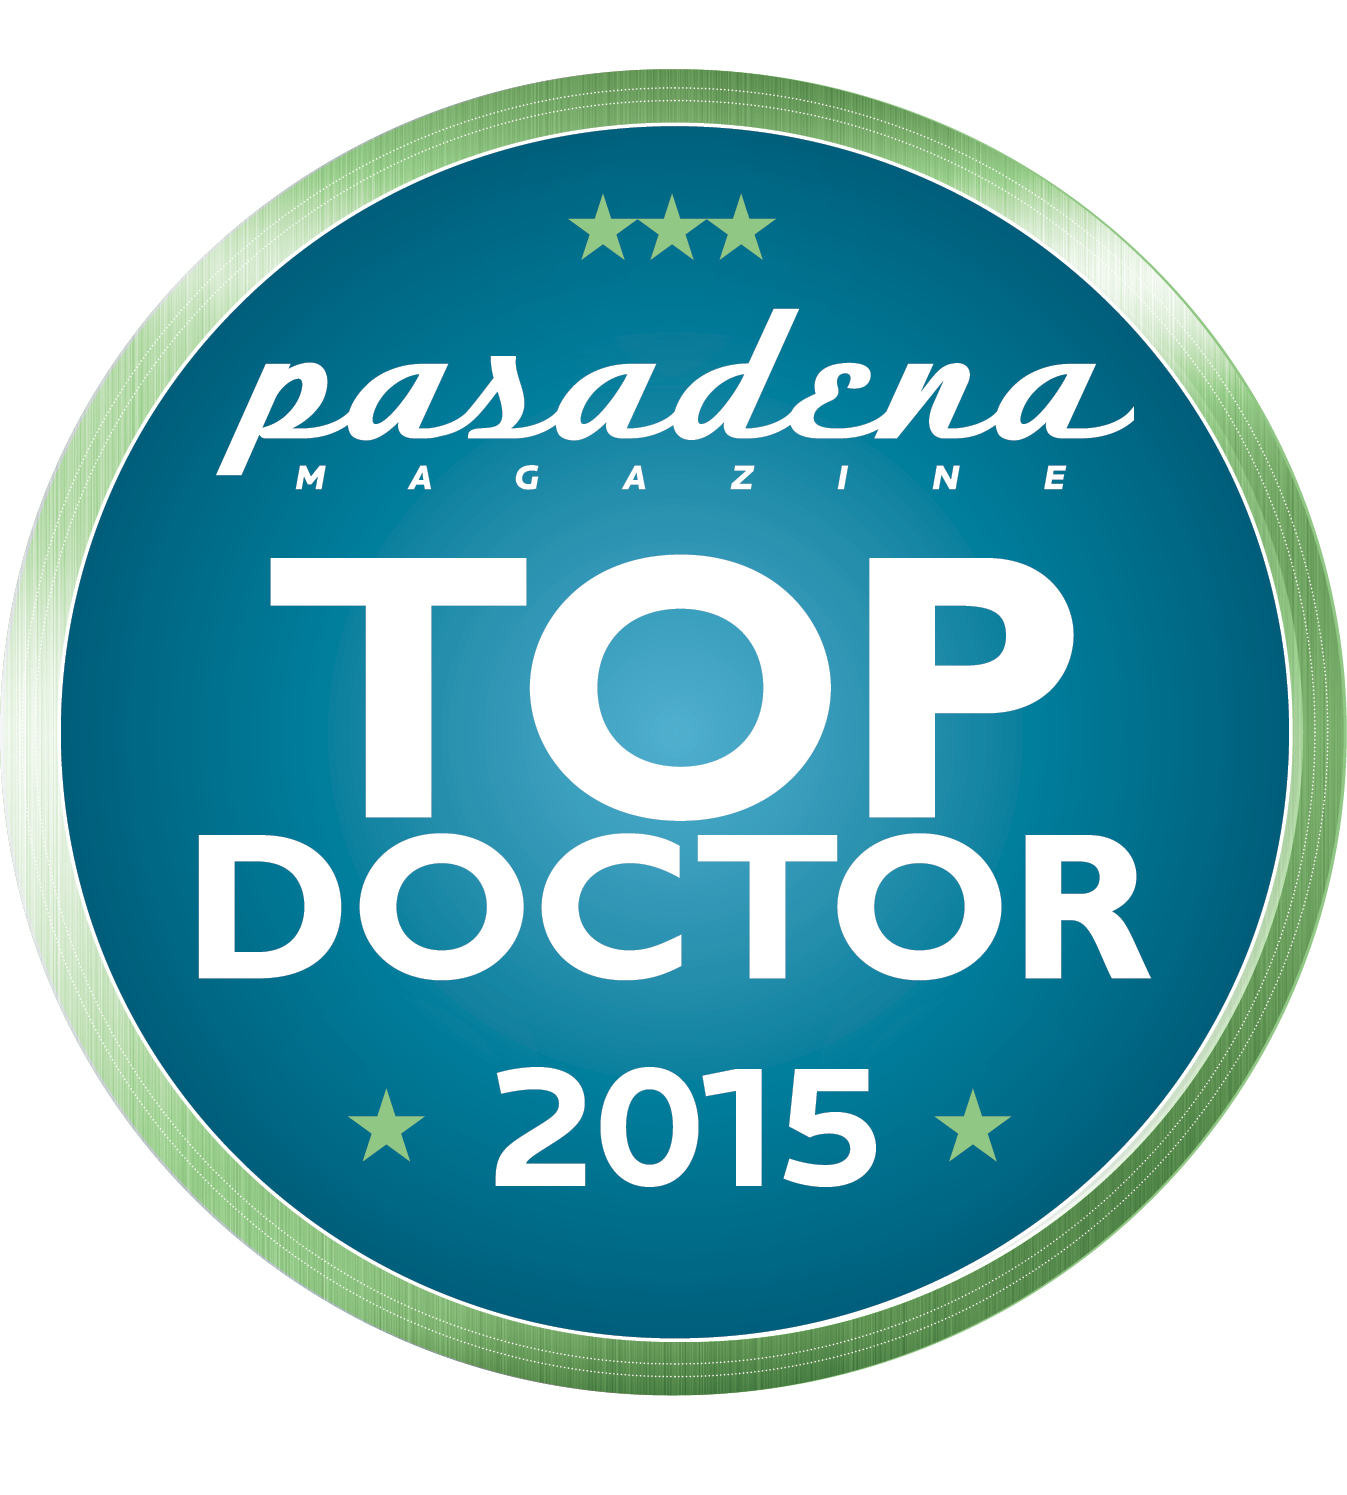 Top Doctor Award - 2015